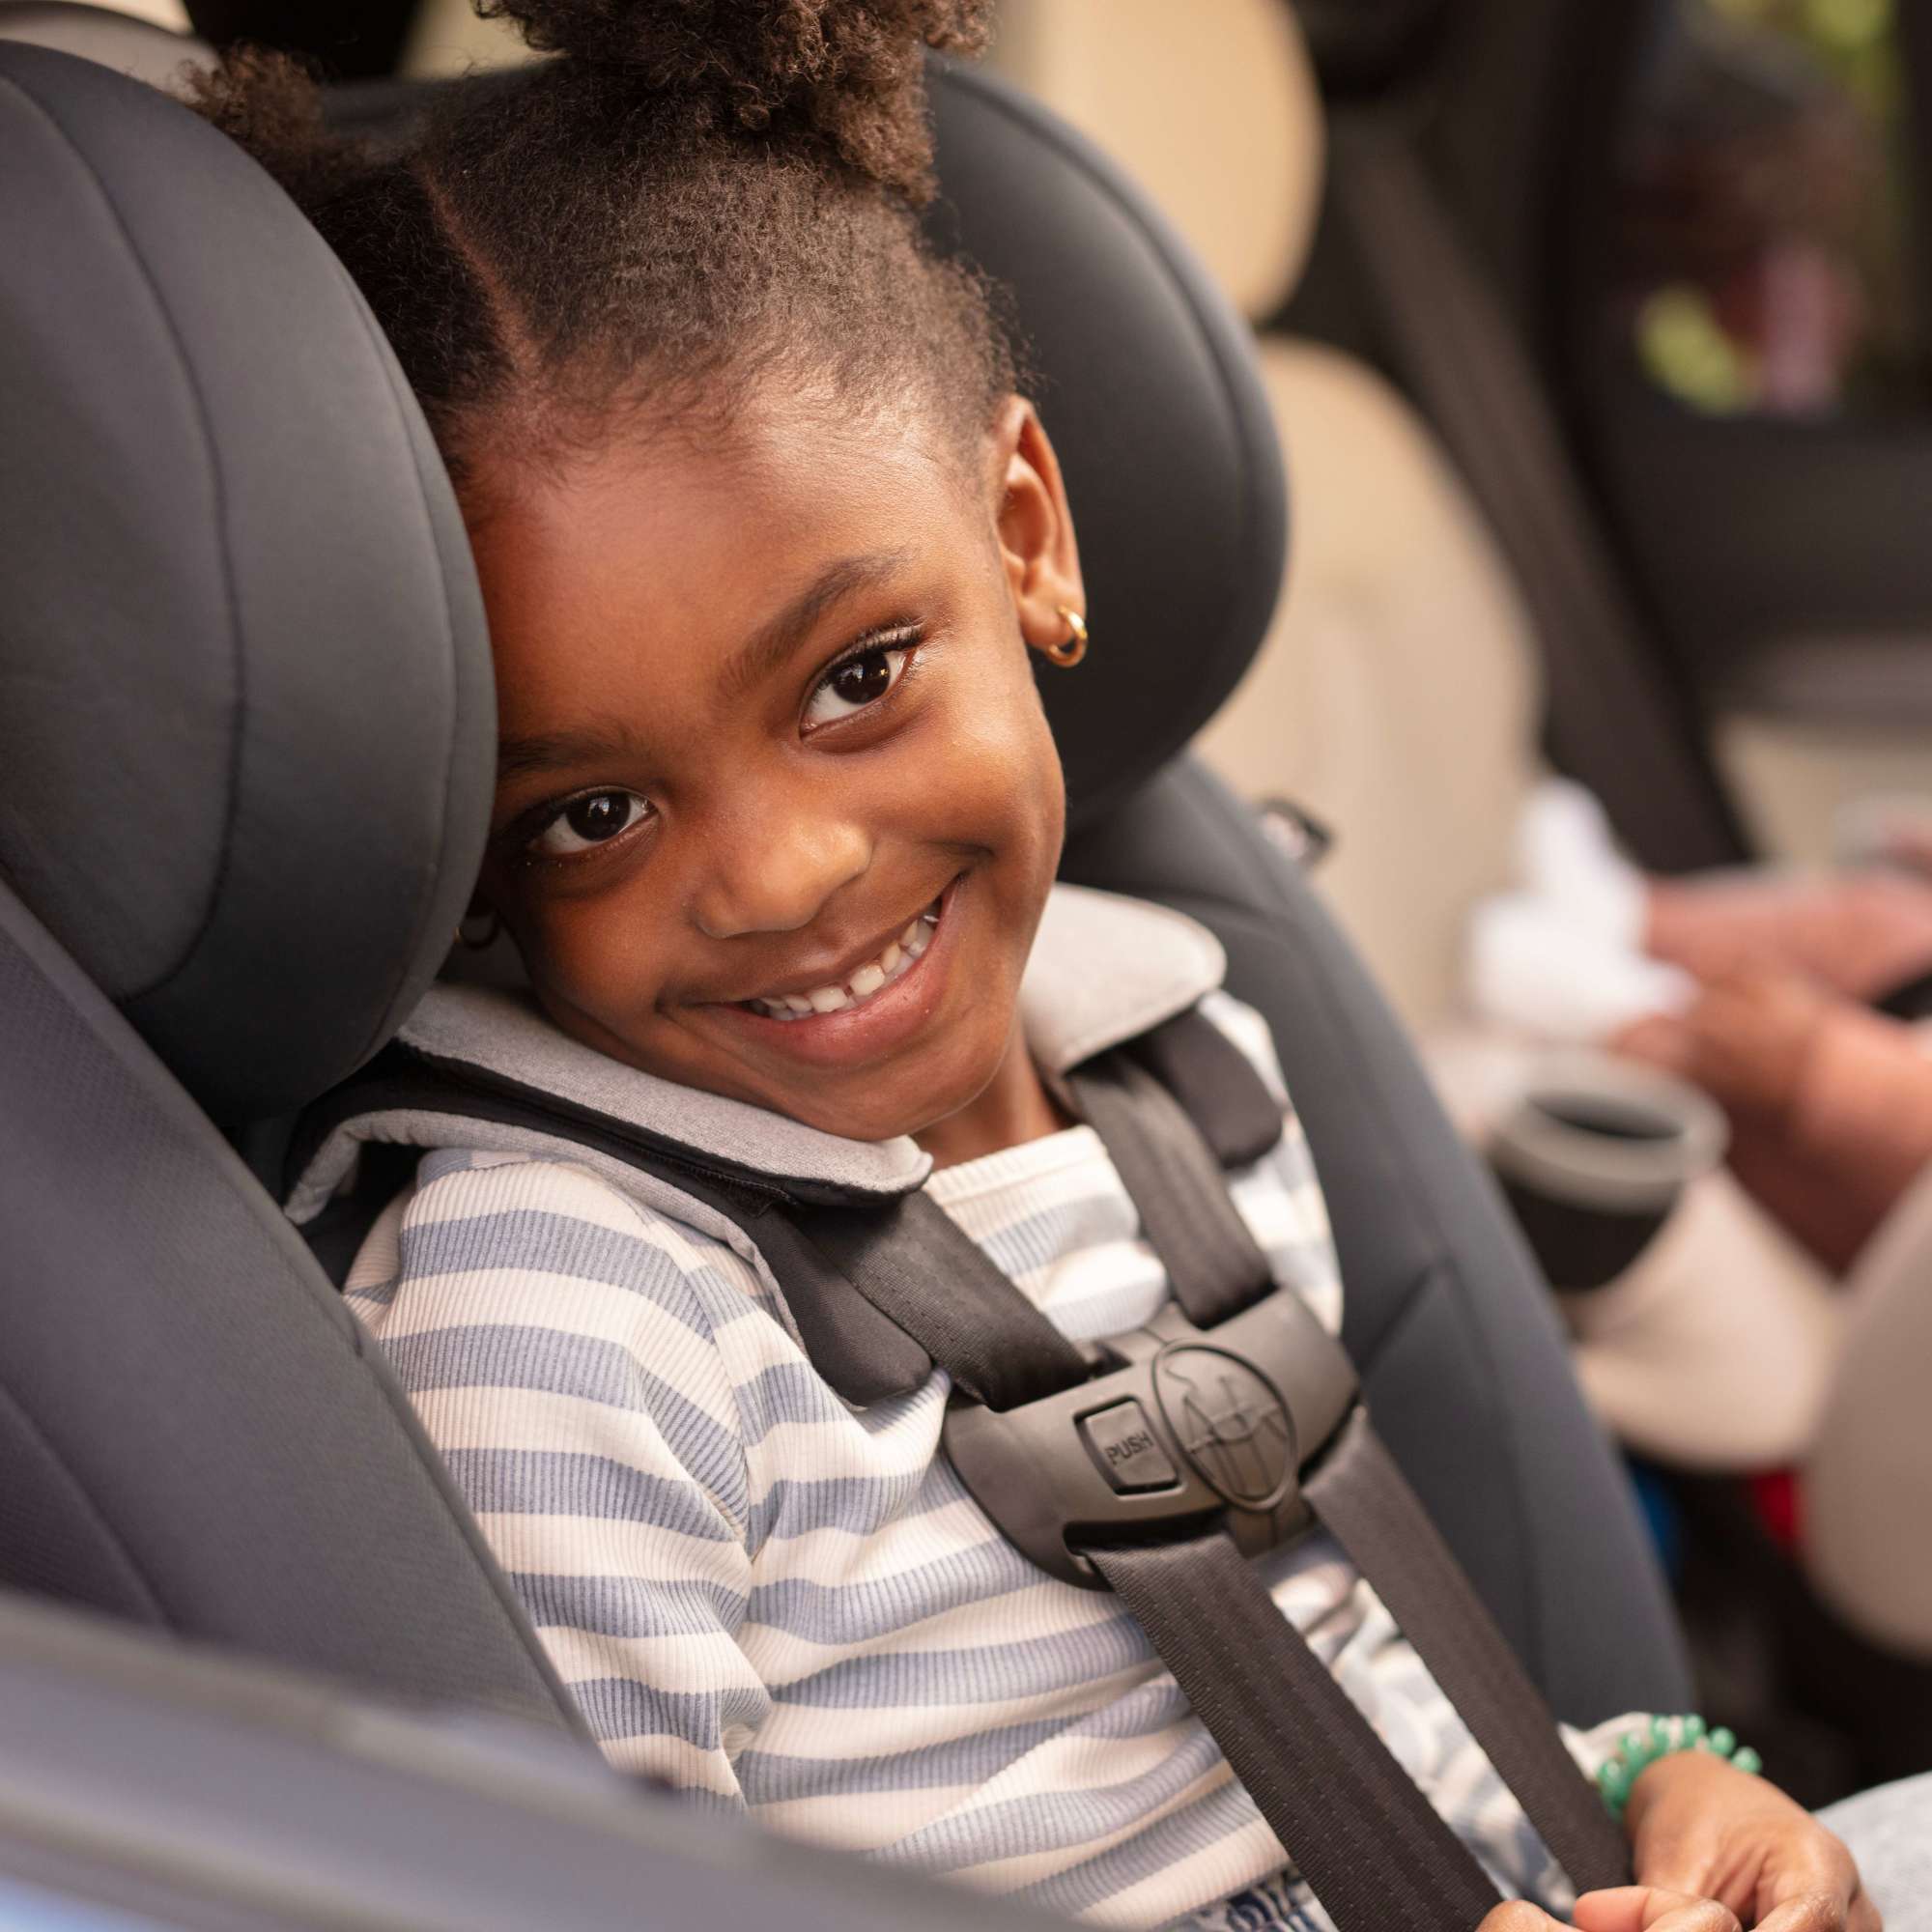 Magellan® LiftFit All-in-One Convertible Car Seat - boy in car seat smiling